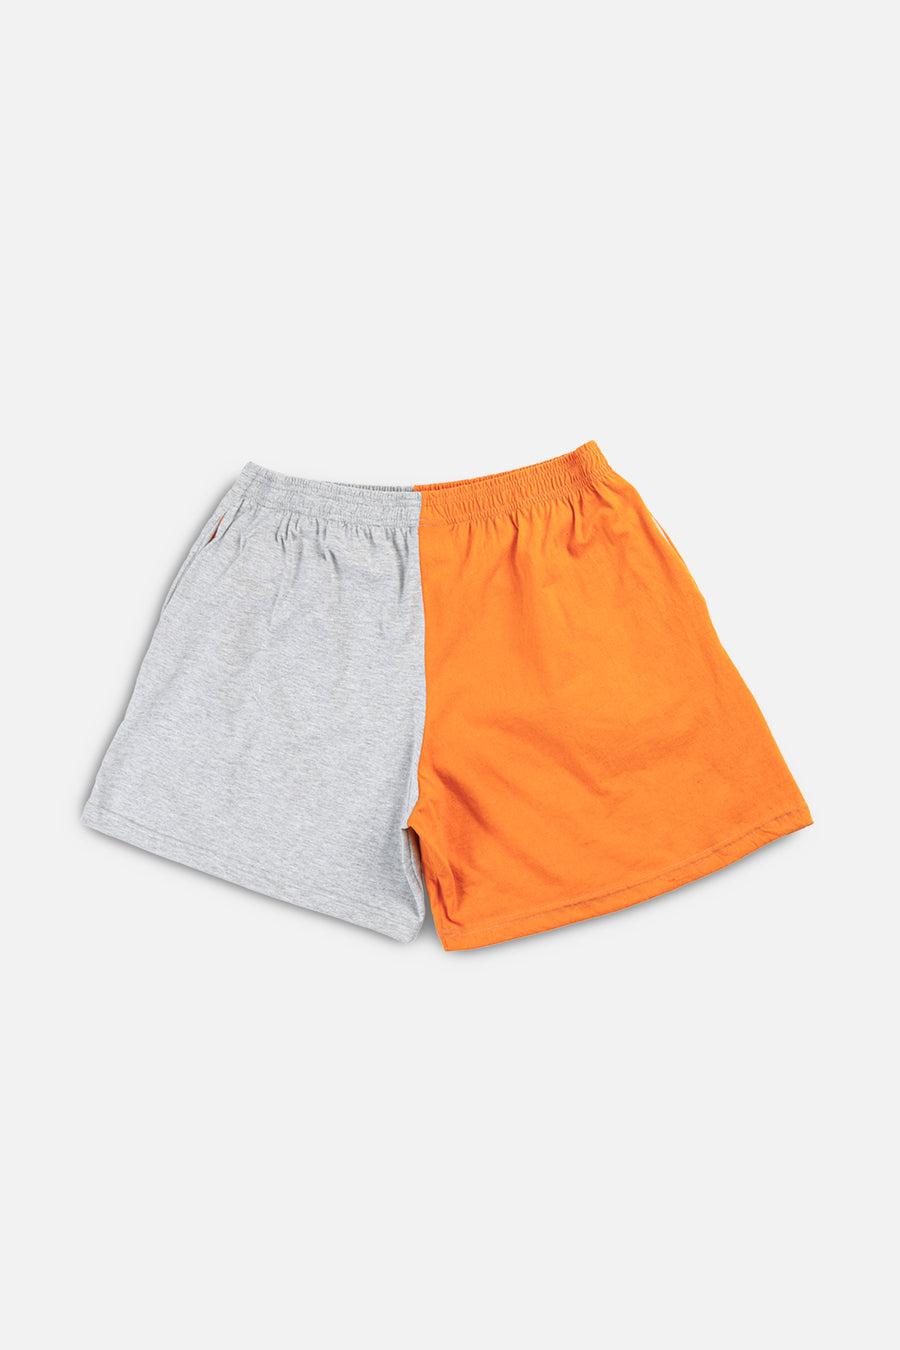 Unisex Rework Tennessee Football Tee Shorts - XL